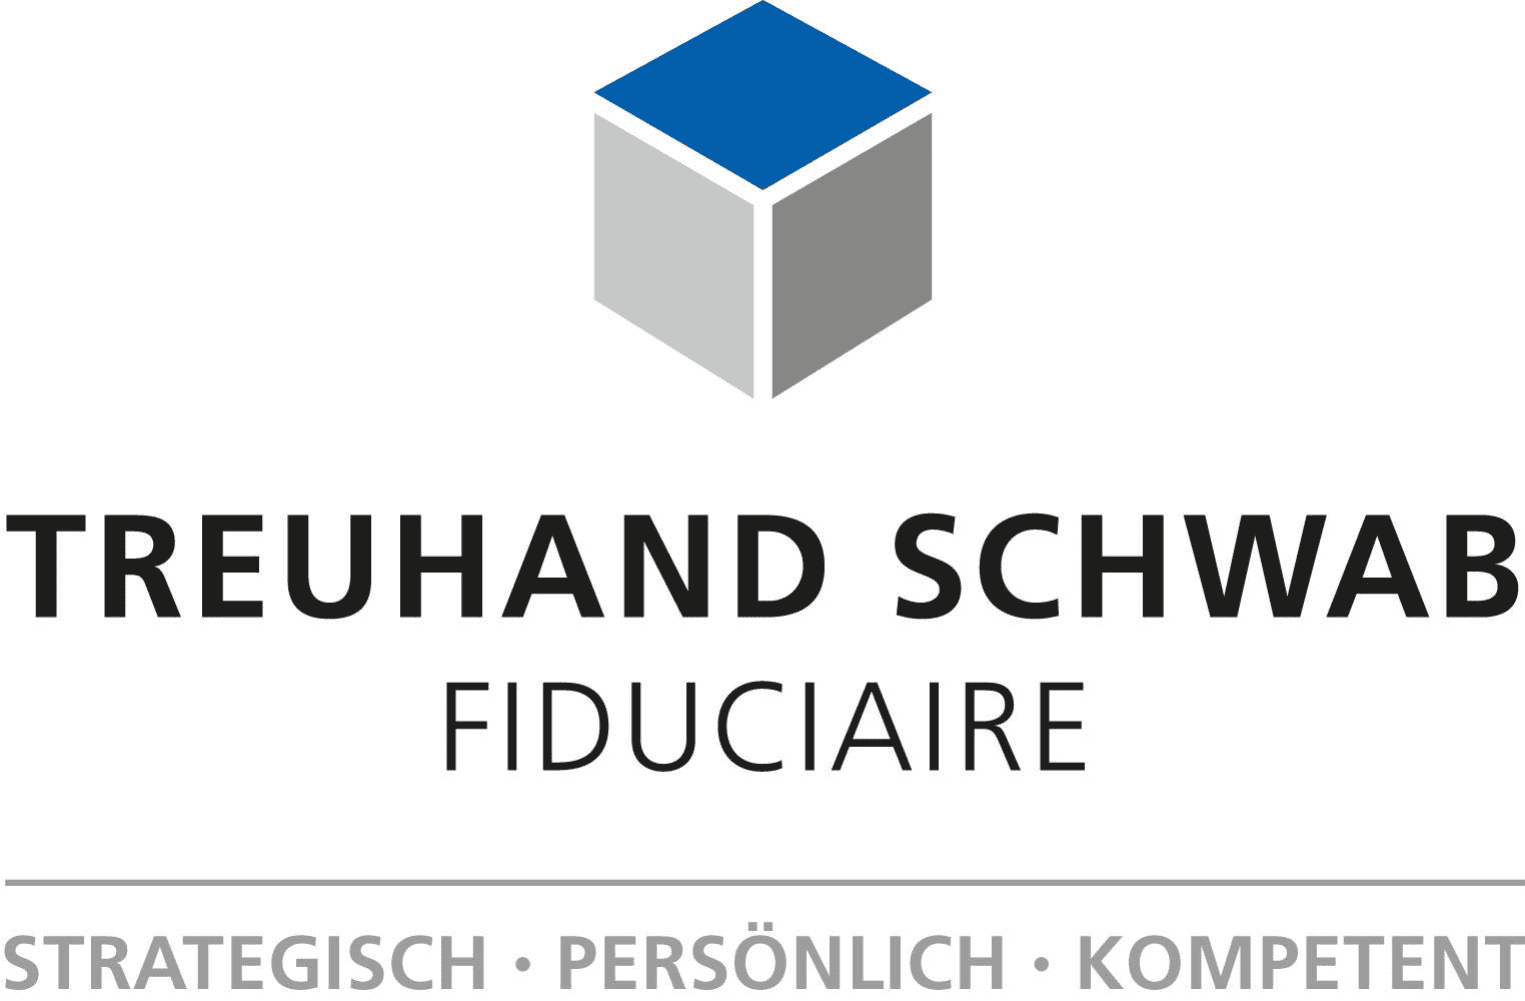 Treuhand Schwab AG